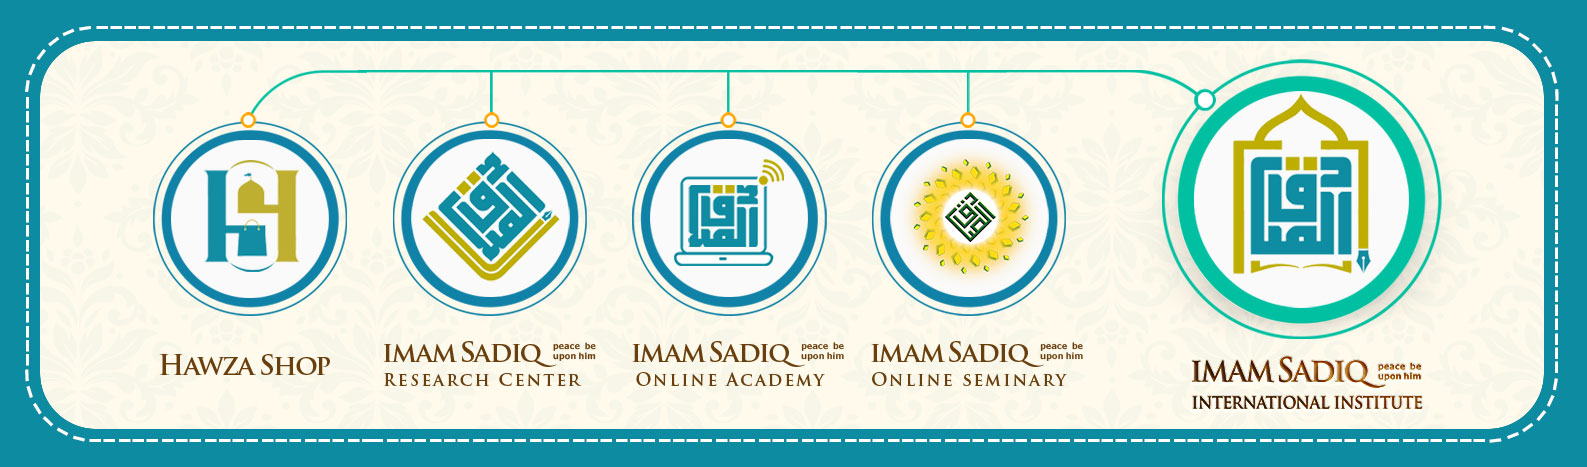 Celebration on the Birth Anniversary of Prophet Mohammad (pbuh) and Imam Sadiq (as), and unveiling ceremony of the logos of Imam Sadiq International Institute